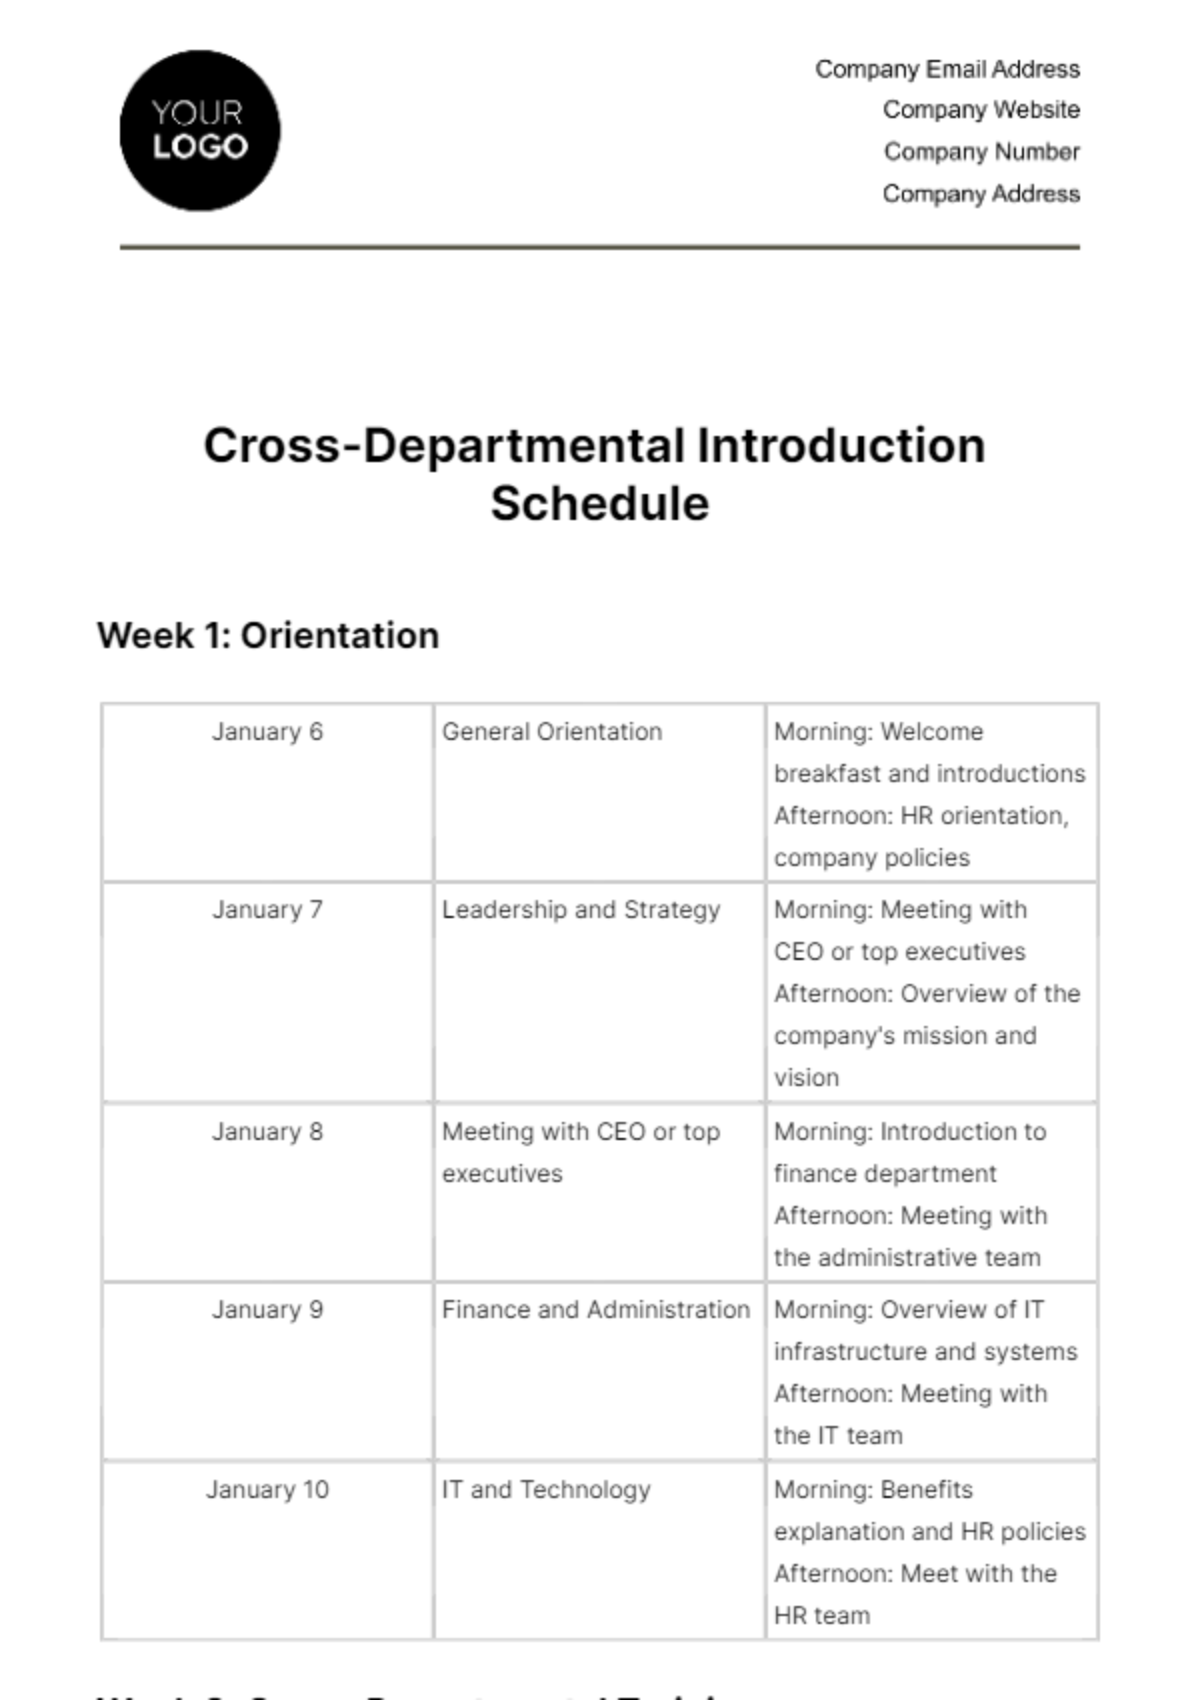 Cross-Departmental Introduction Schedule HR Template